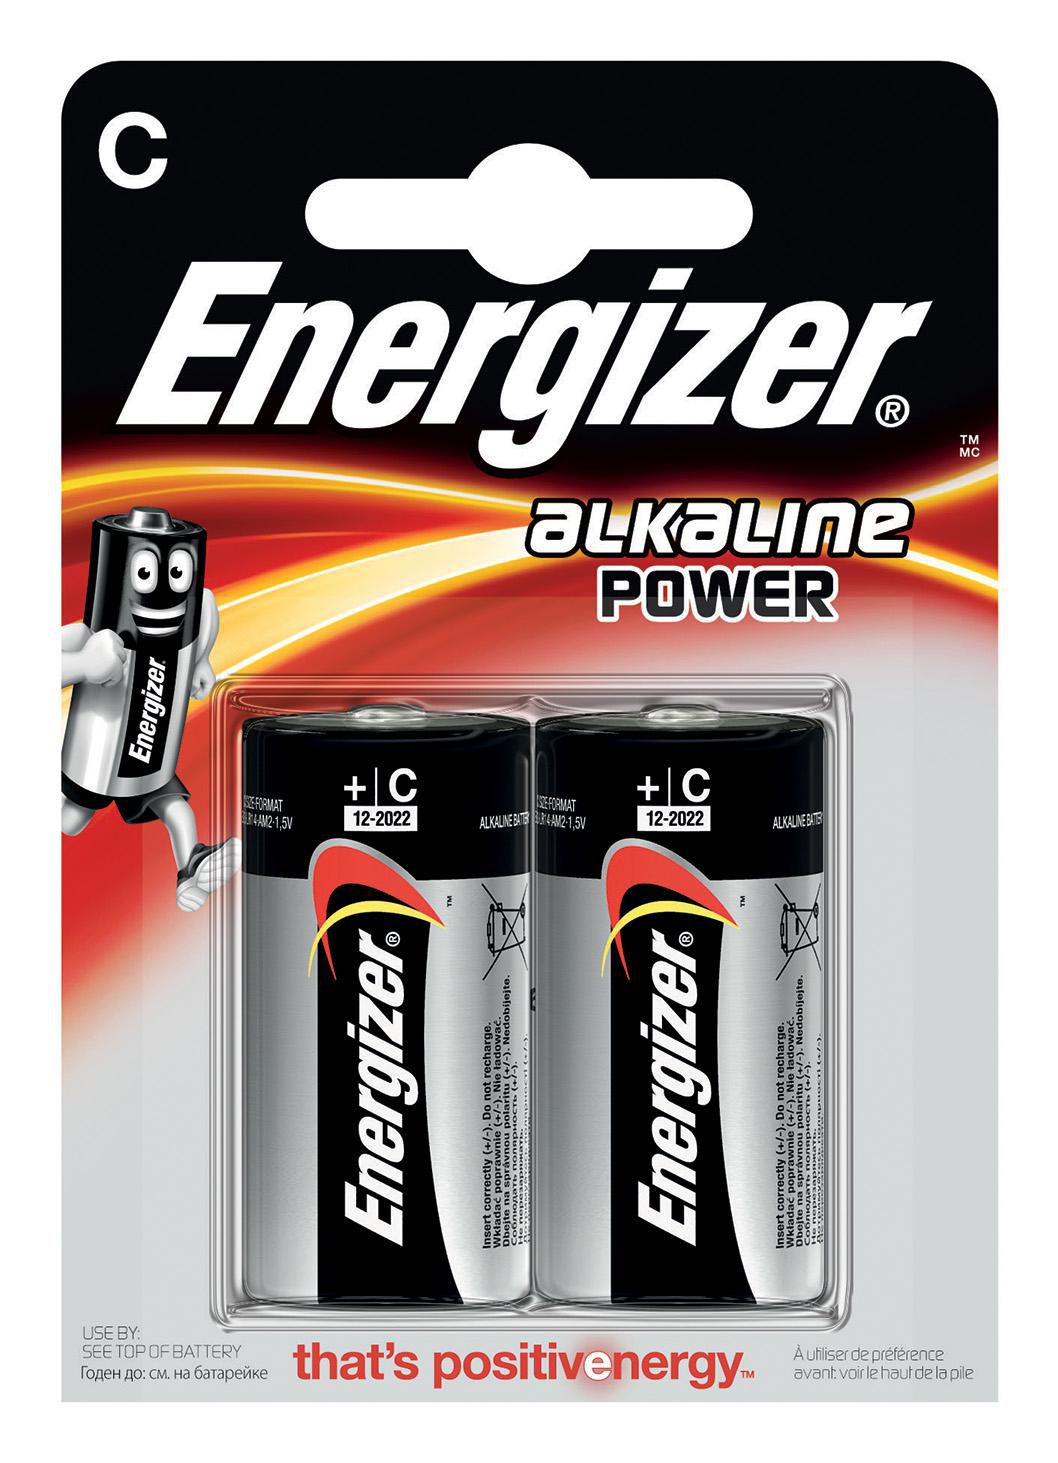 Energizer E300152100 W128253121 Alkaline Power C Single-Use 